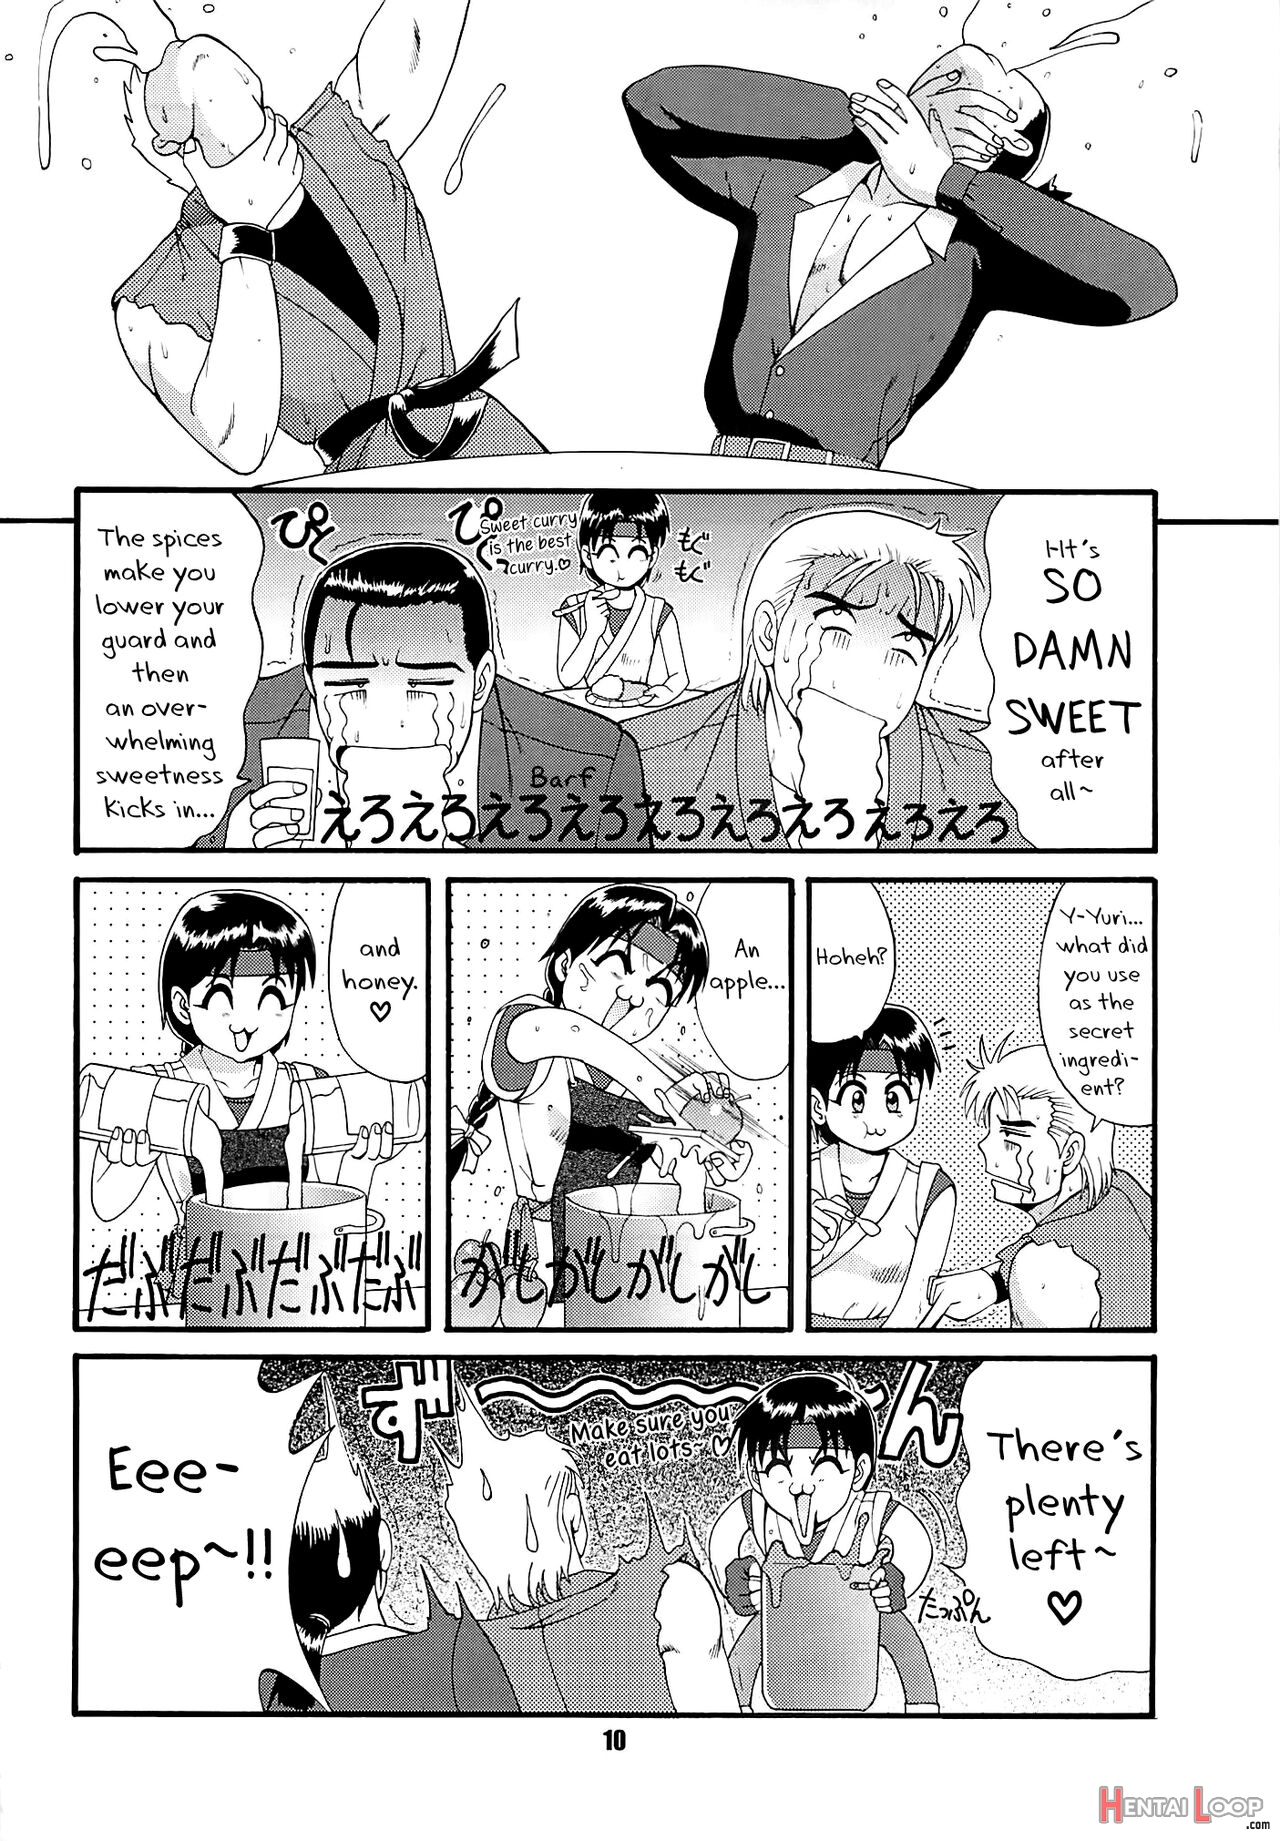 The Yuri & Friends '97 page 10